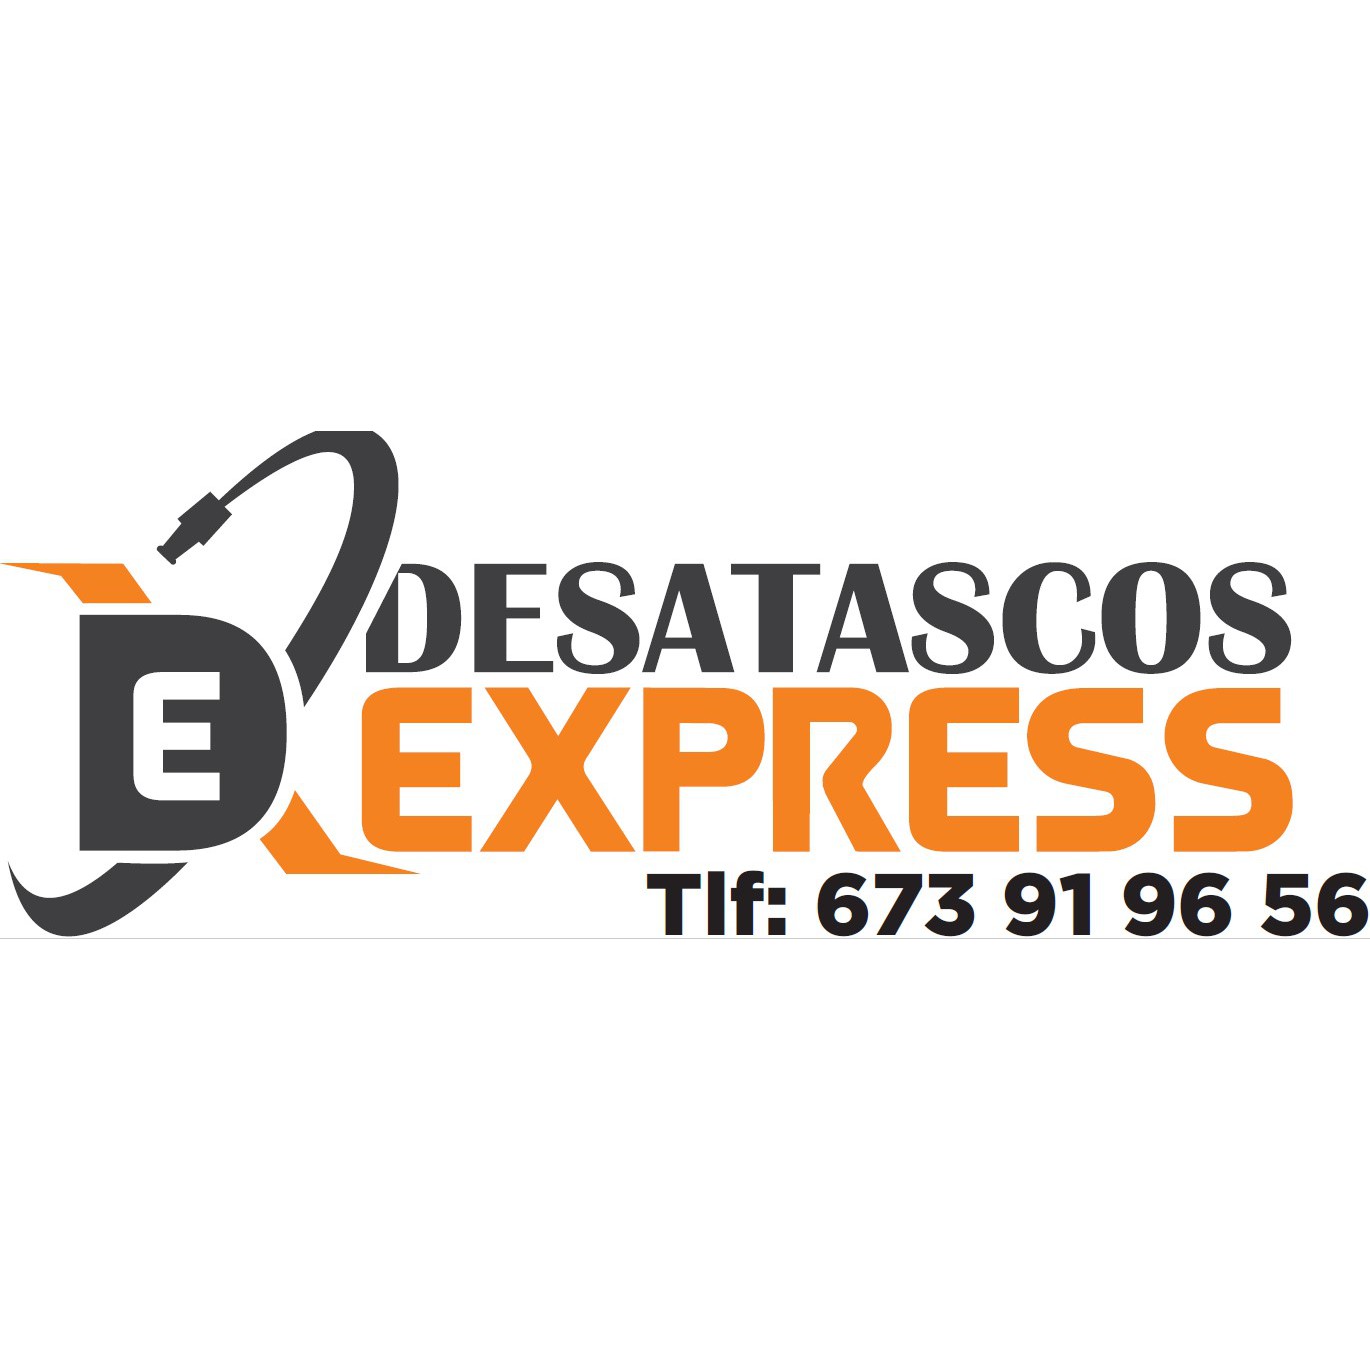 Desatascos Express Huelva Logo